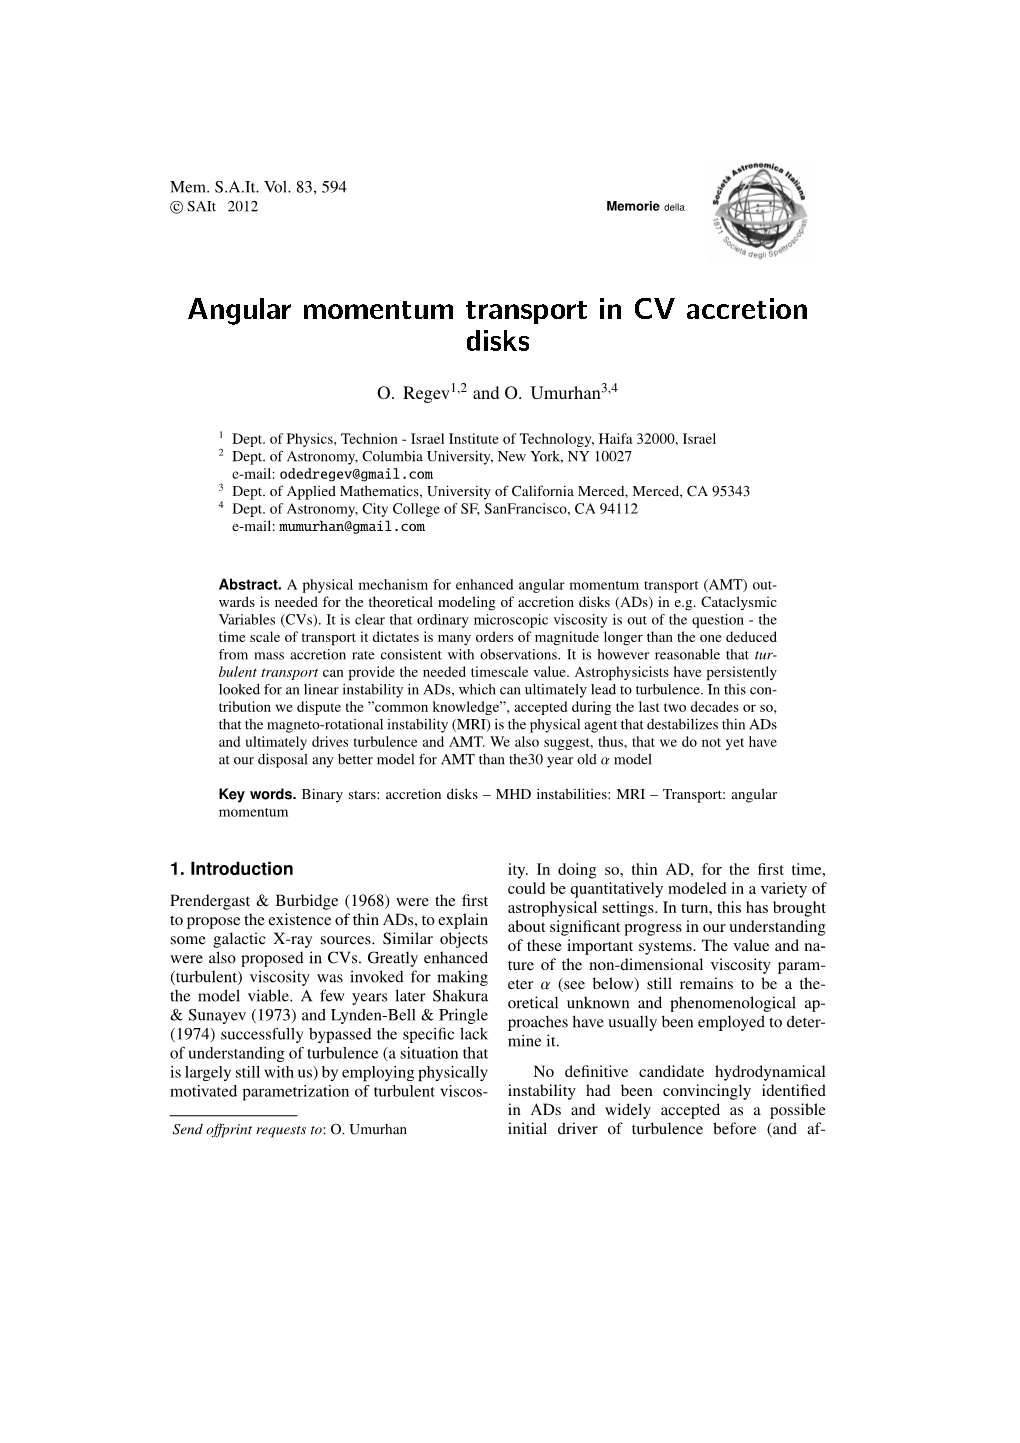 Angular Momentum Transport in CV Accretion Disks